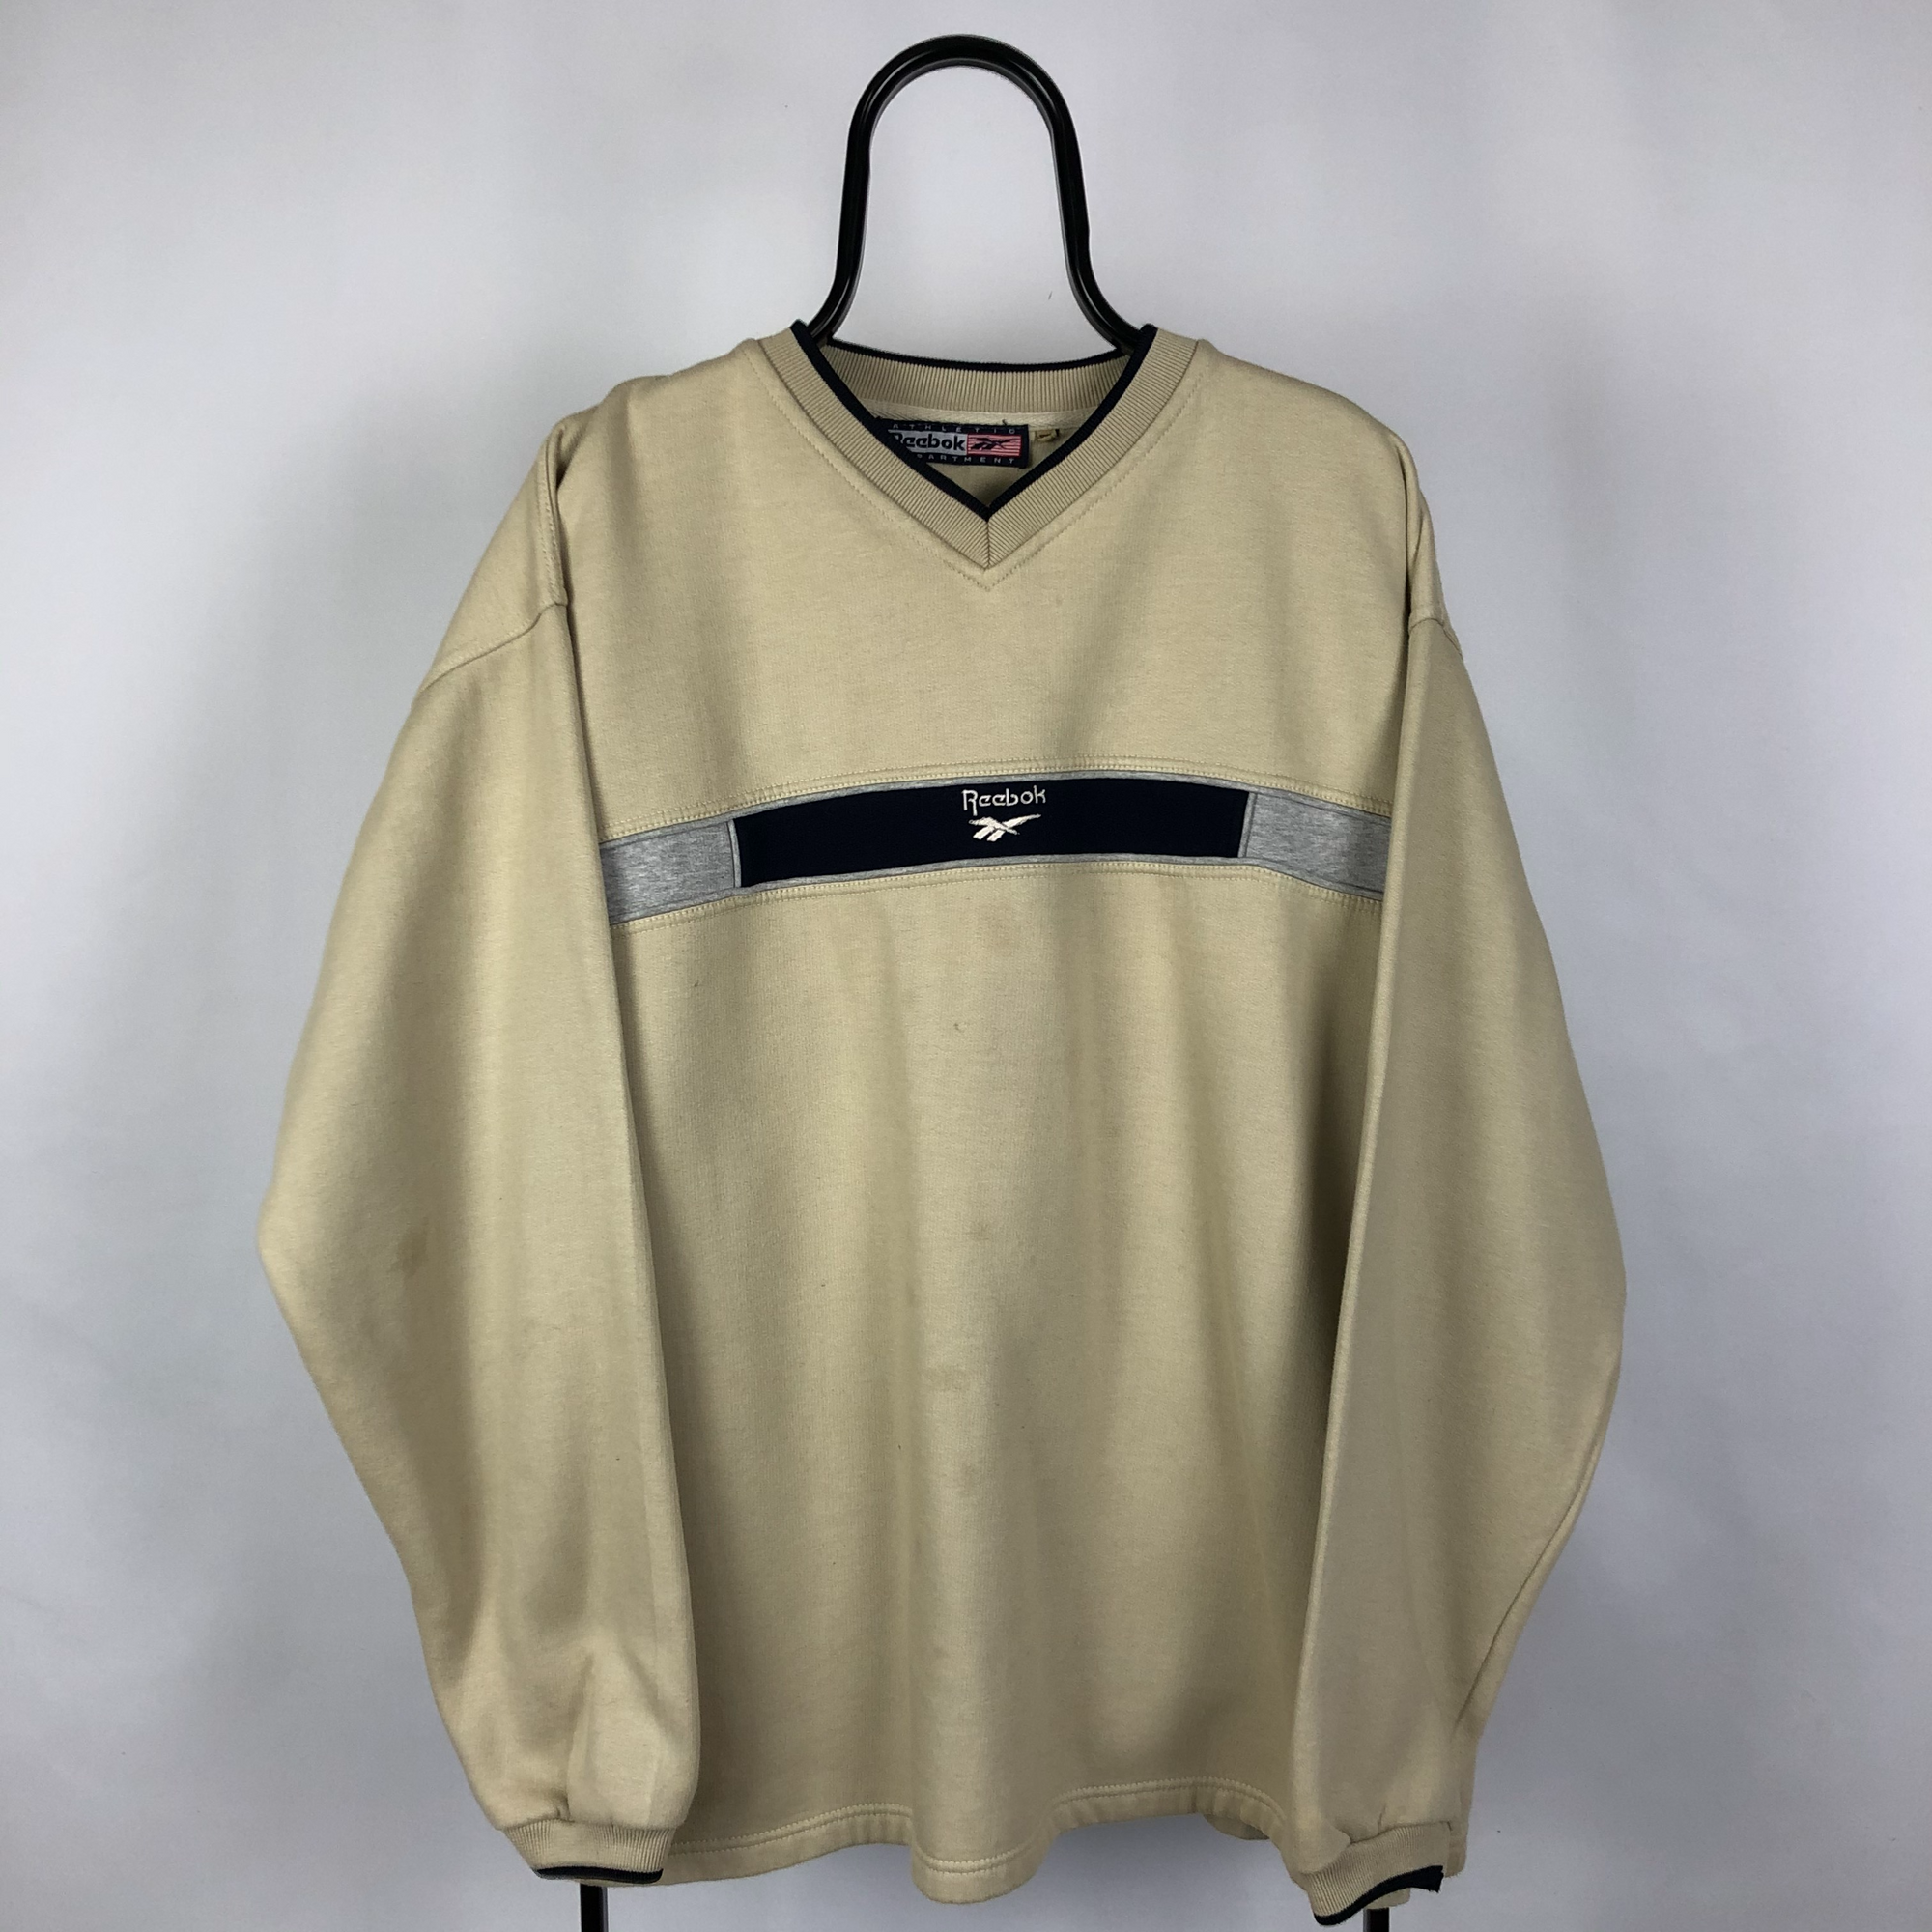 Vintage Reebok Sweatshirt in Beige - Men's XL/Women's XXL